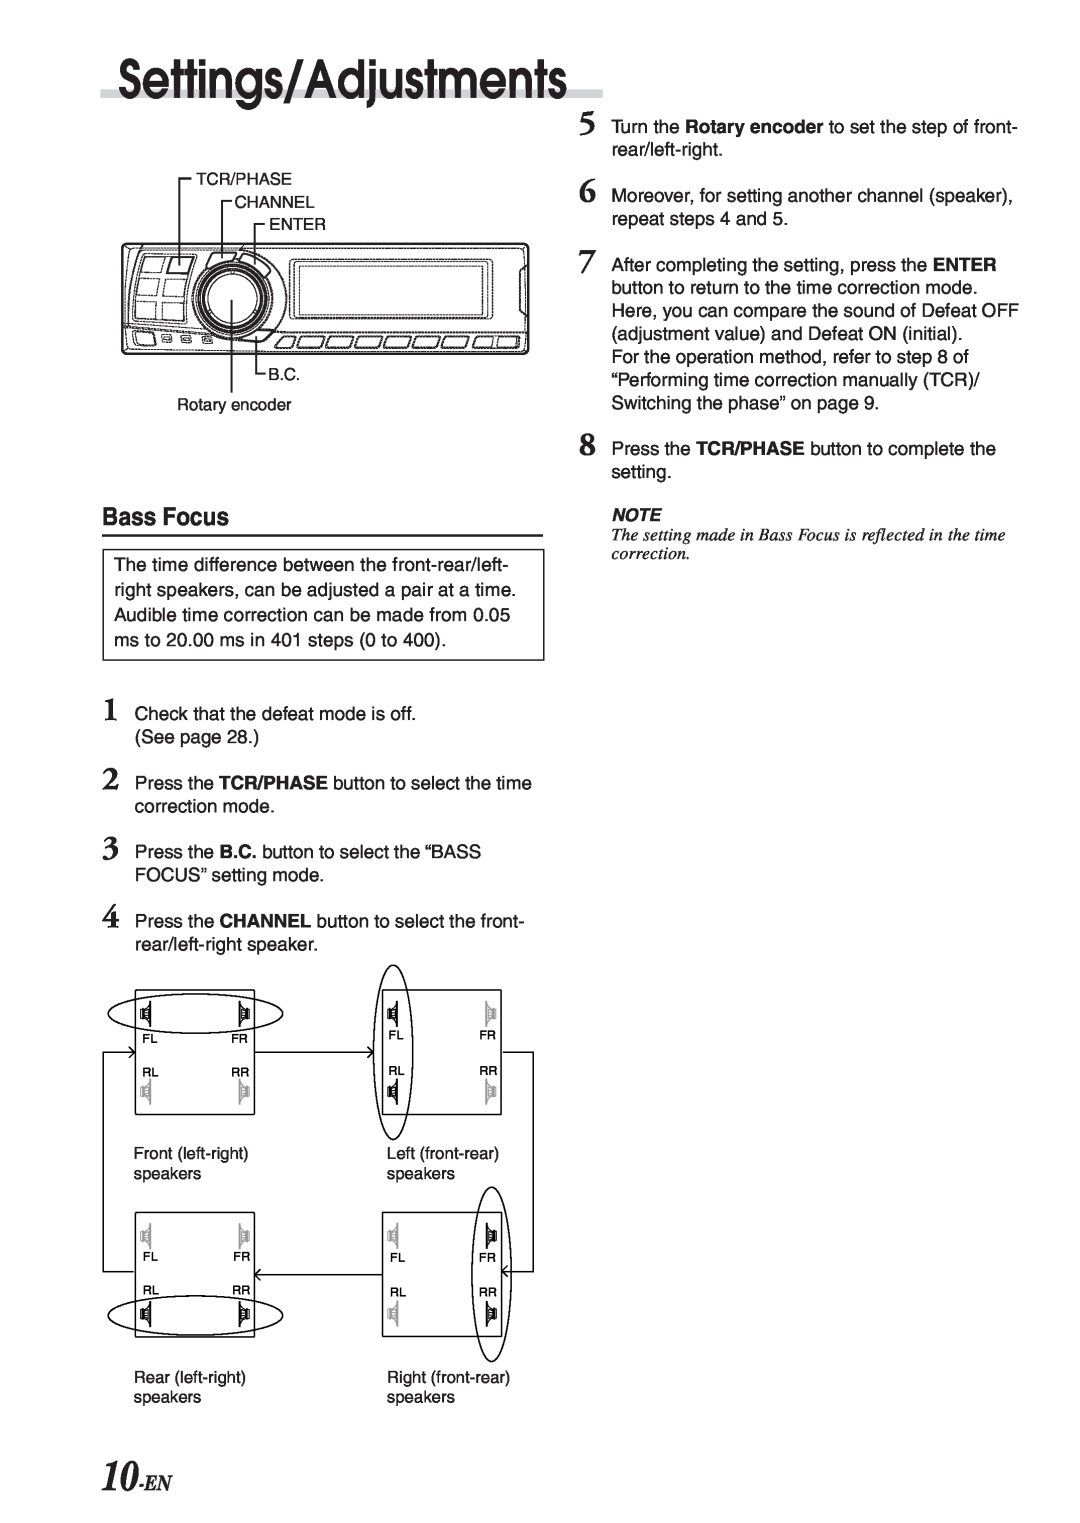 Alpine PXA-H701 owner manual Settings/Adjustments, Bass Focus, 10-EN 